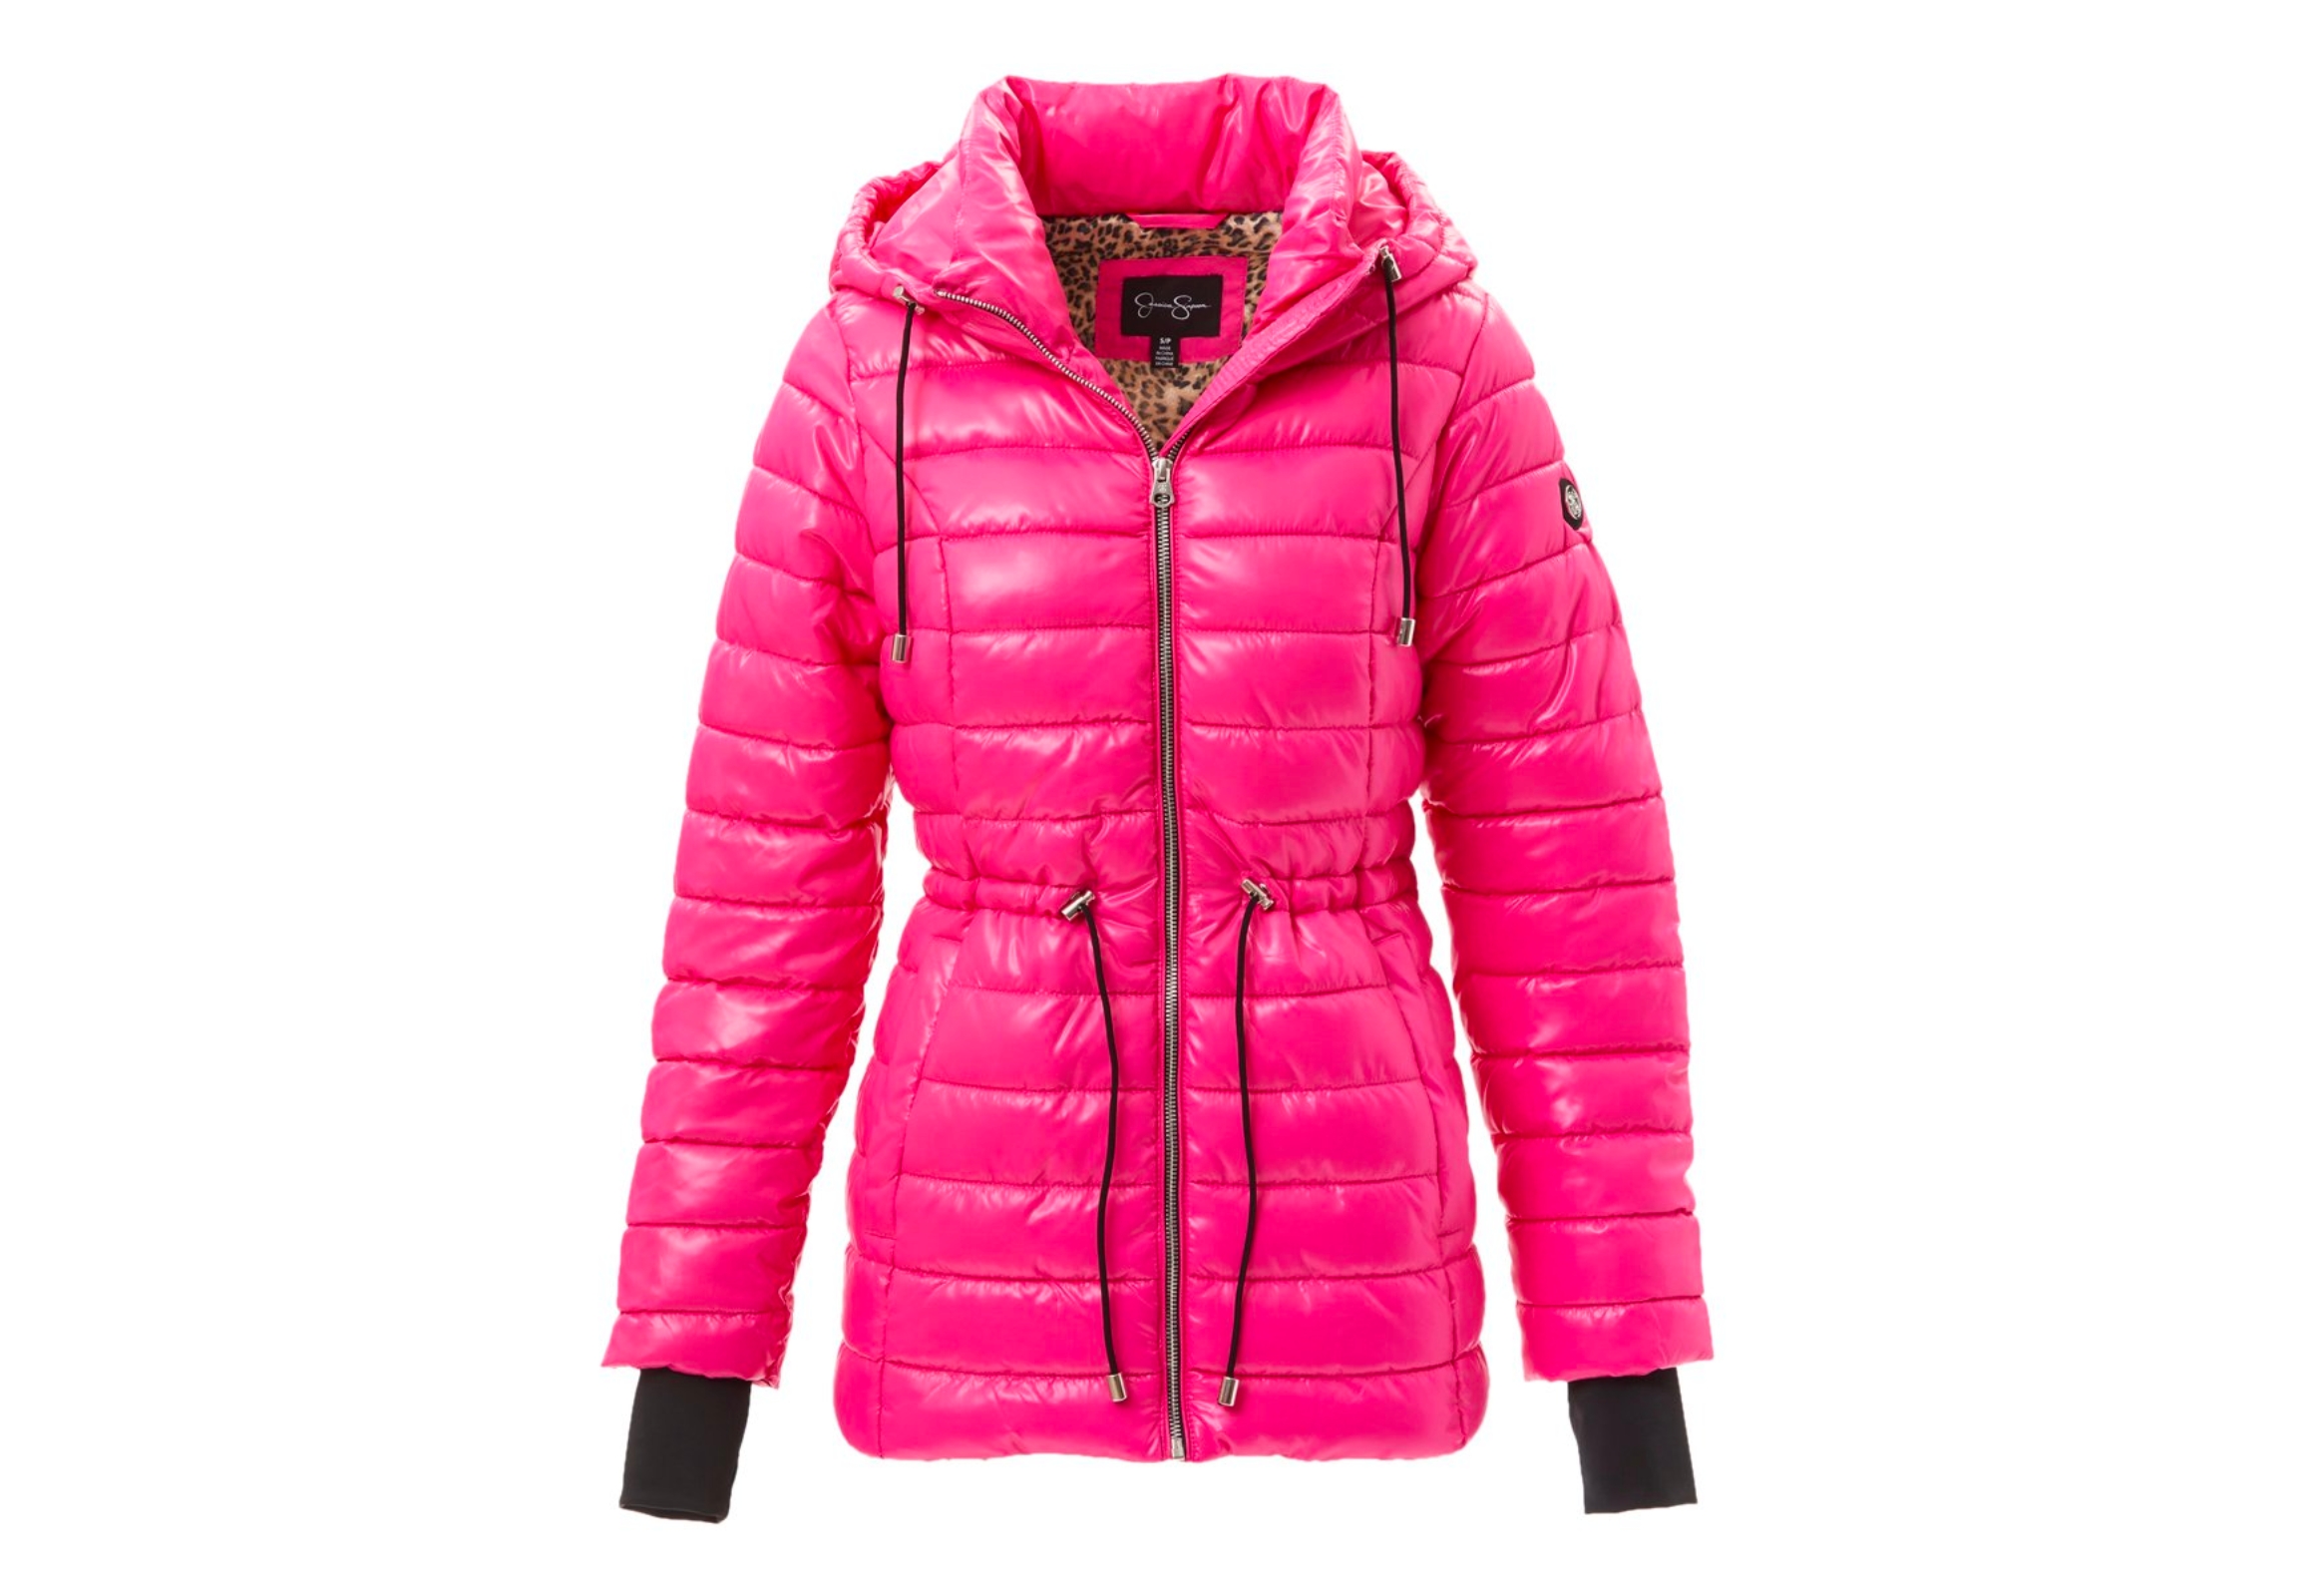 Jessica Simpson Pink Puffer Coat